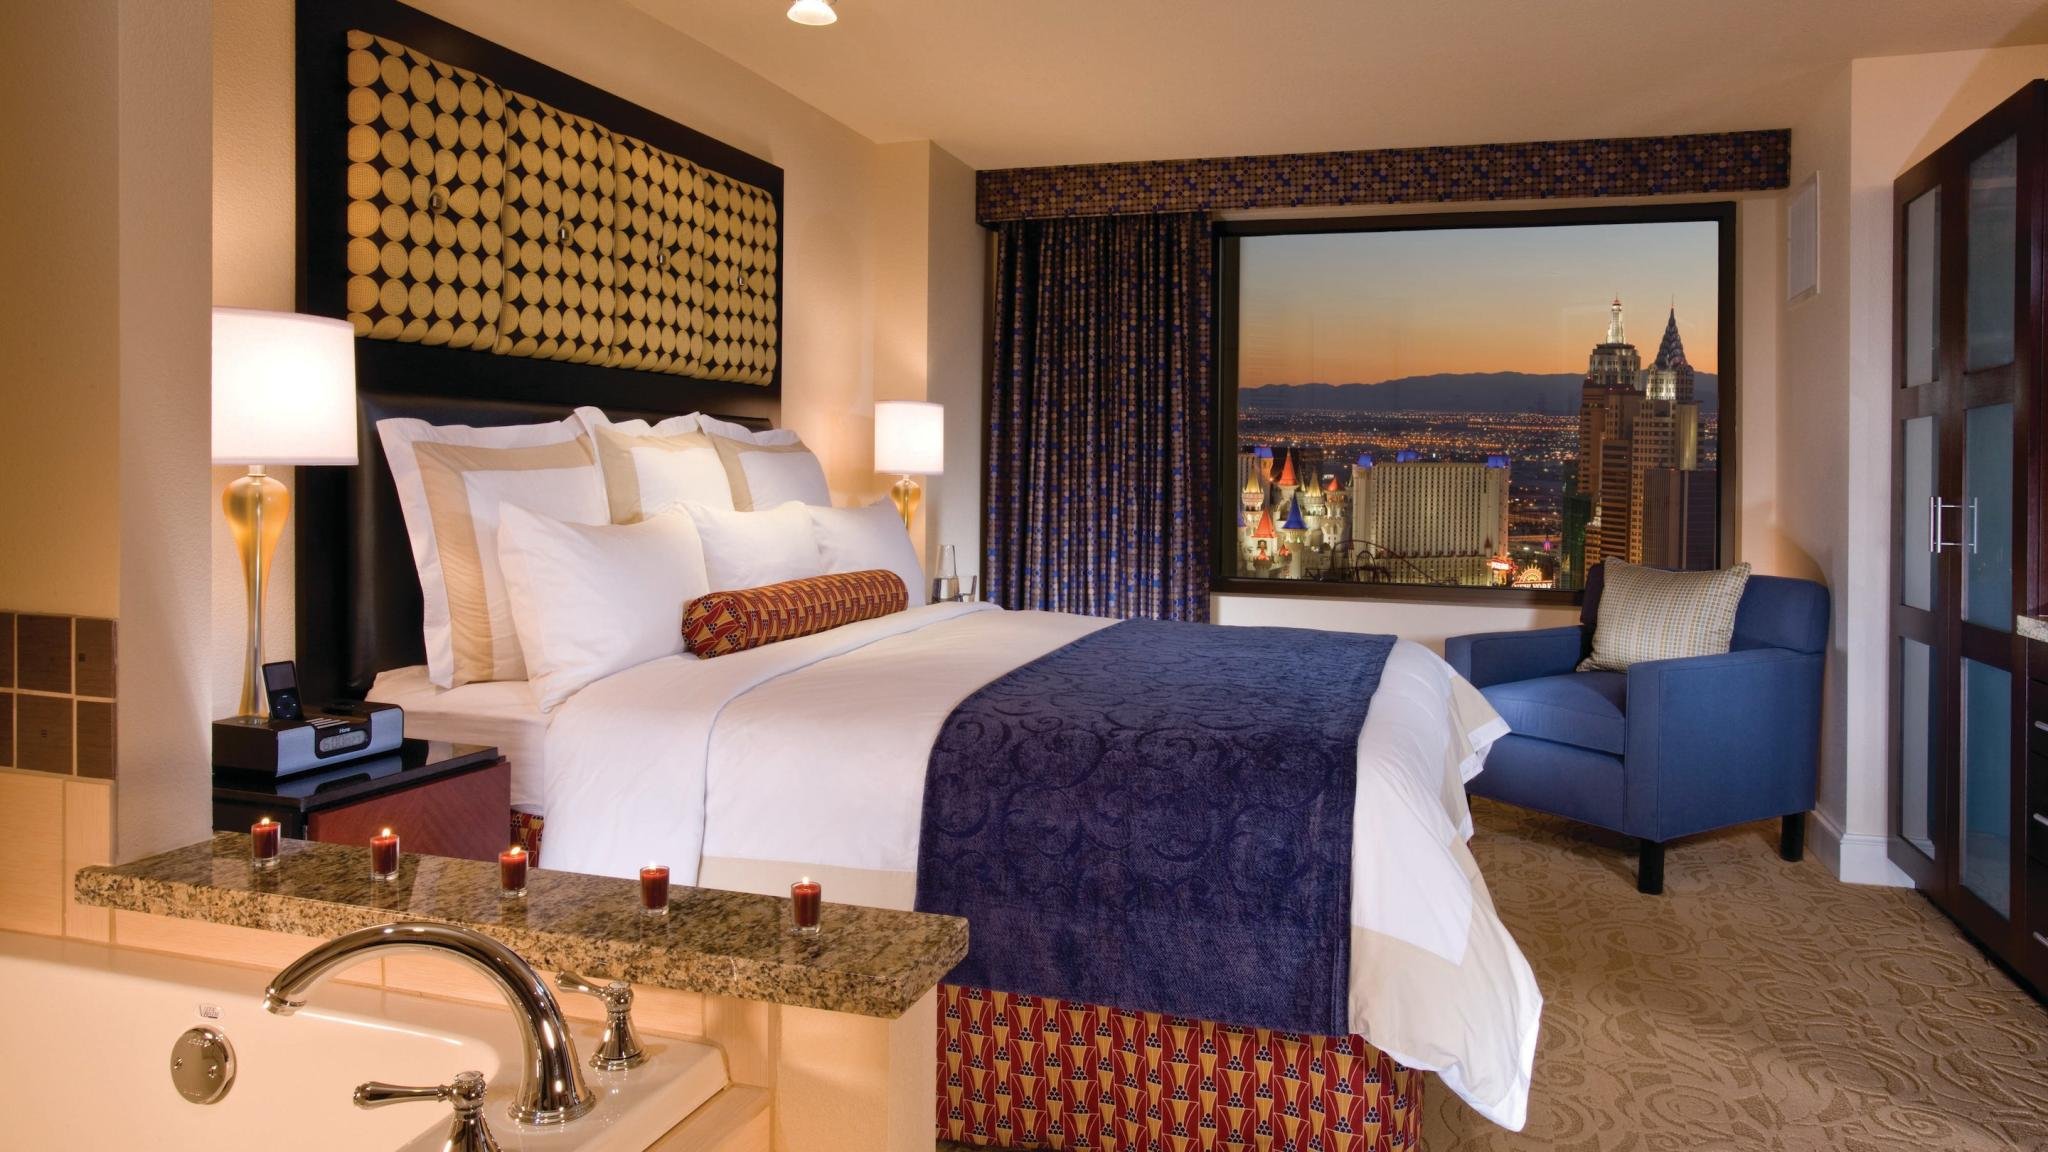 Marriott Grand Chateau - 2 Bedroom, 2 Bath Villa Located Off the Las Vegas  Strip - Las Vegas